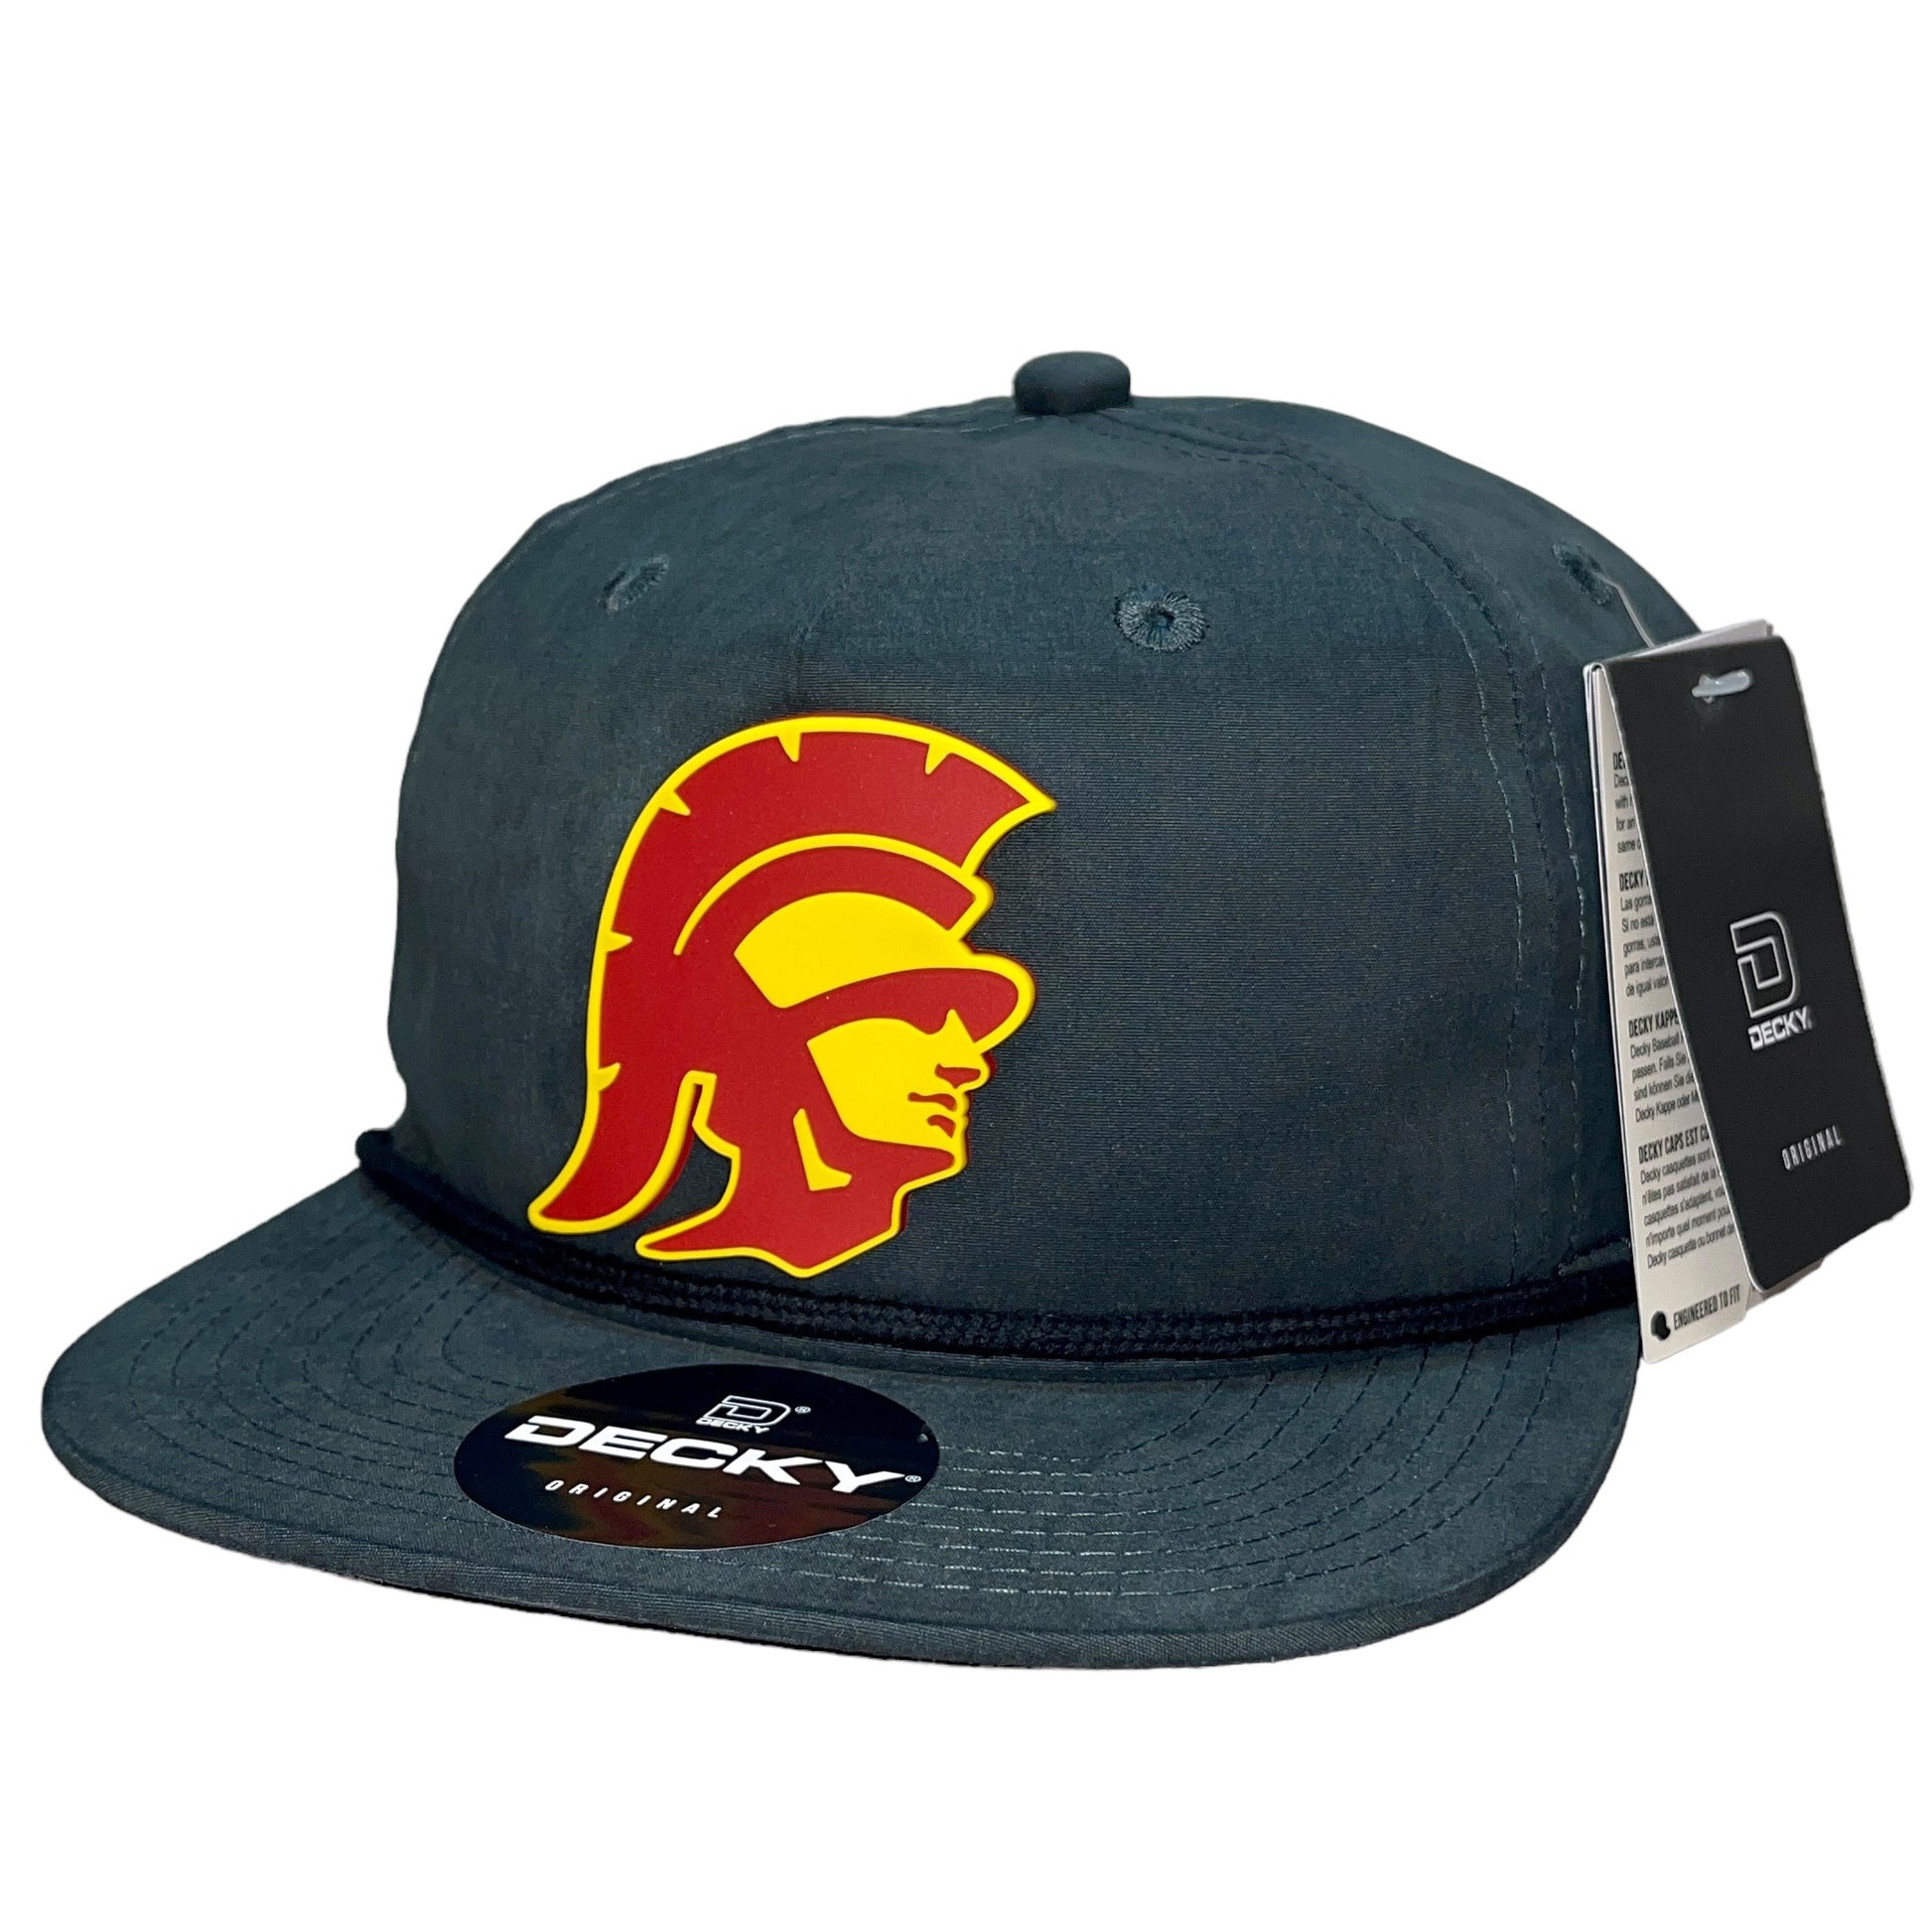 USC Trojans 3D Classic Rope Hat- Charcoal/ Black - Ten Gallon Hat Co.